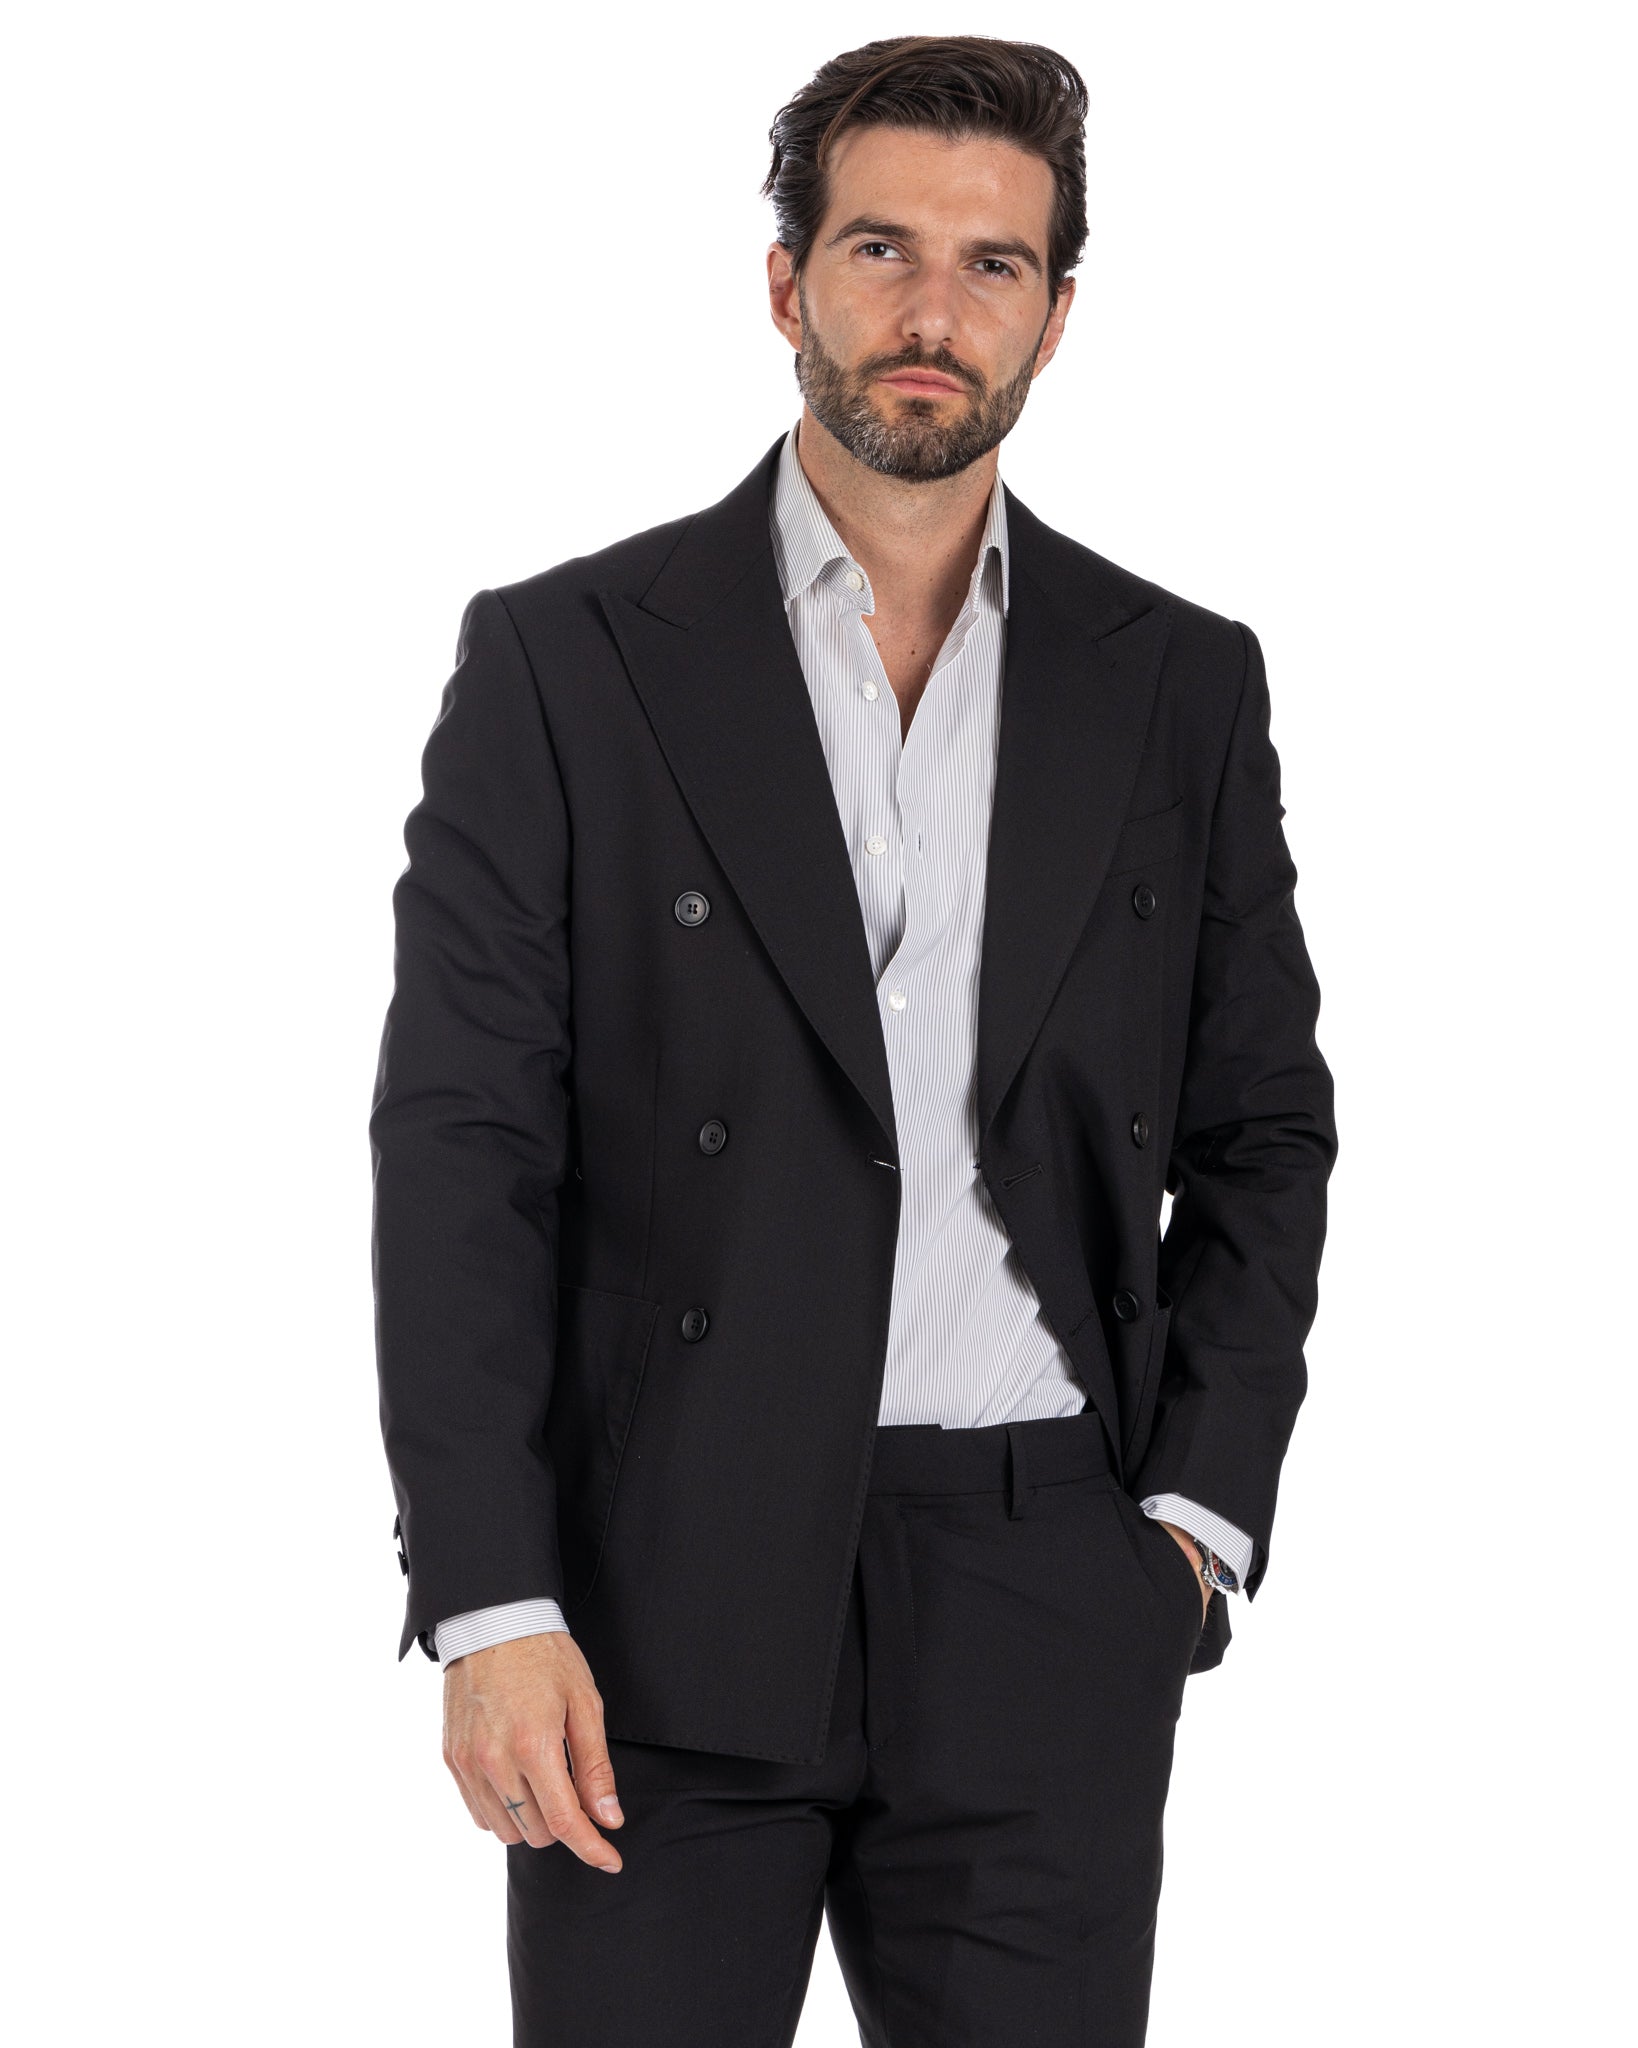 Monaco - black double-breasted suit